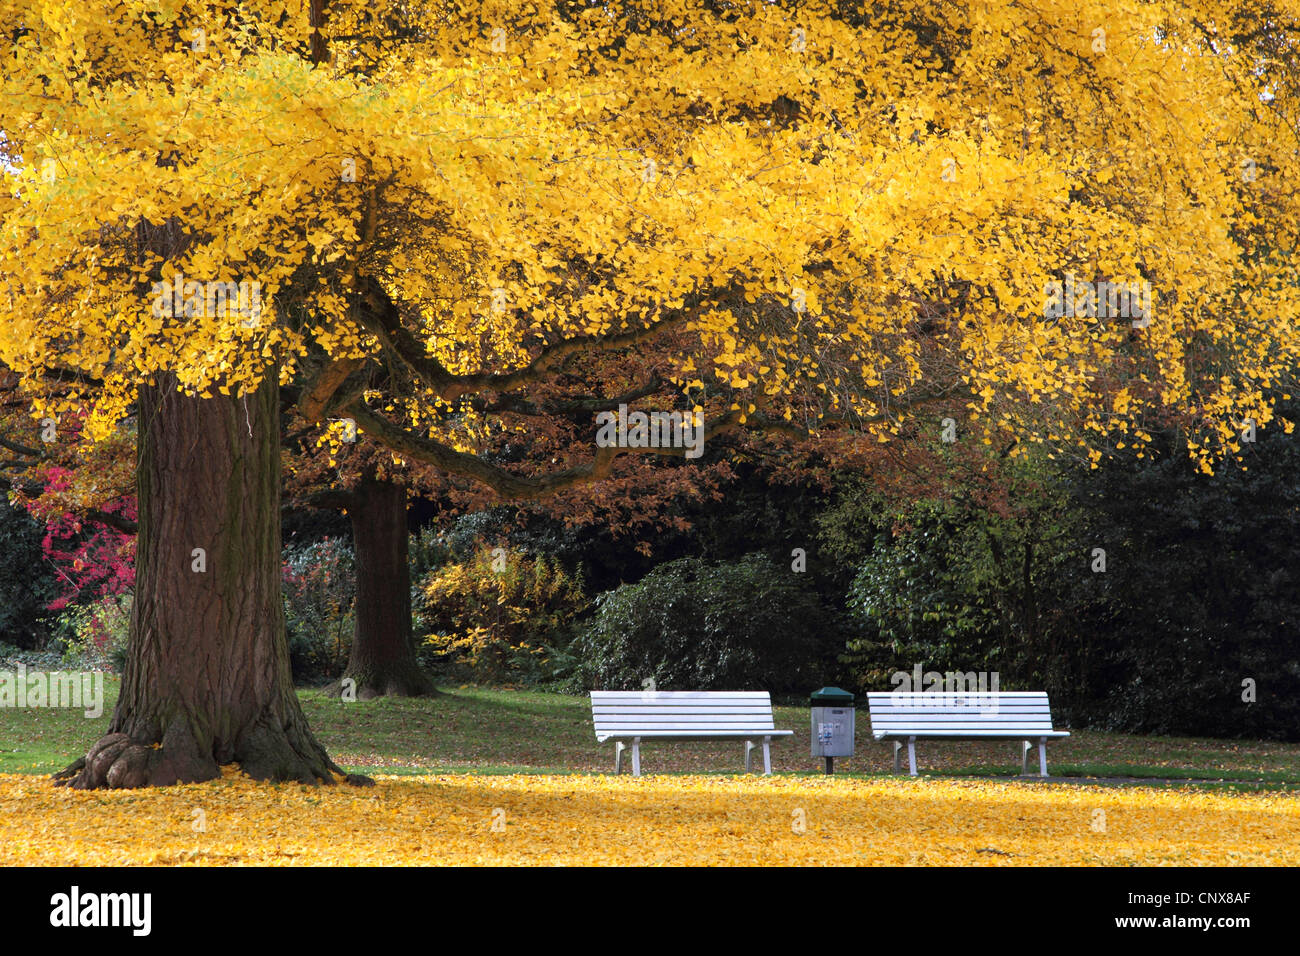 Maidenhair tree, árbol de ginkgo, Árbol Ginko, árbol de ginkgo (Ginkgo biloba), en un parque en otoño con bancos Foto de stock